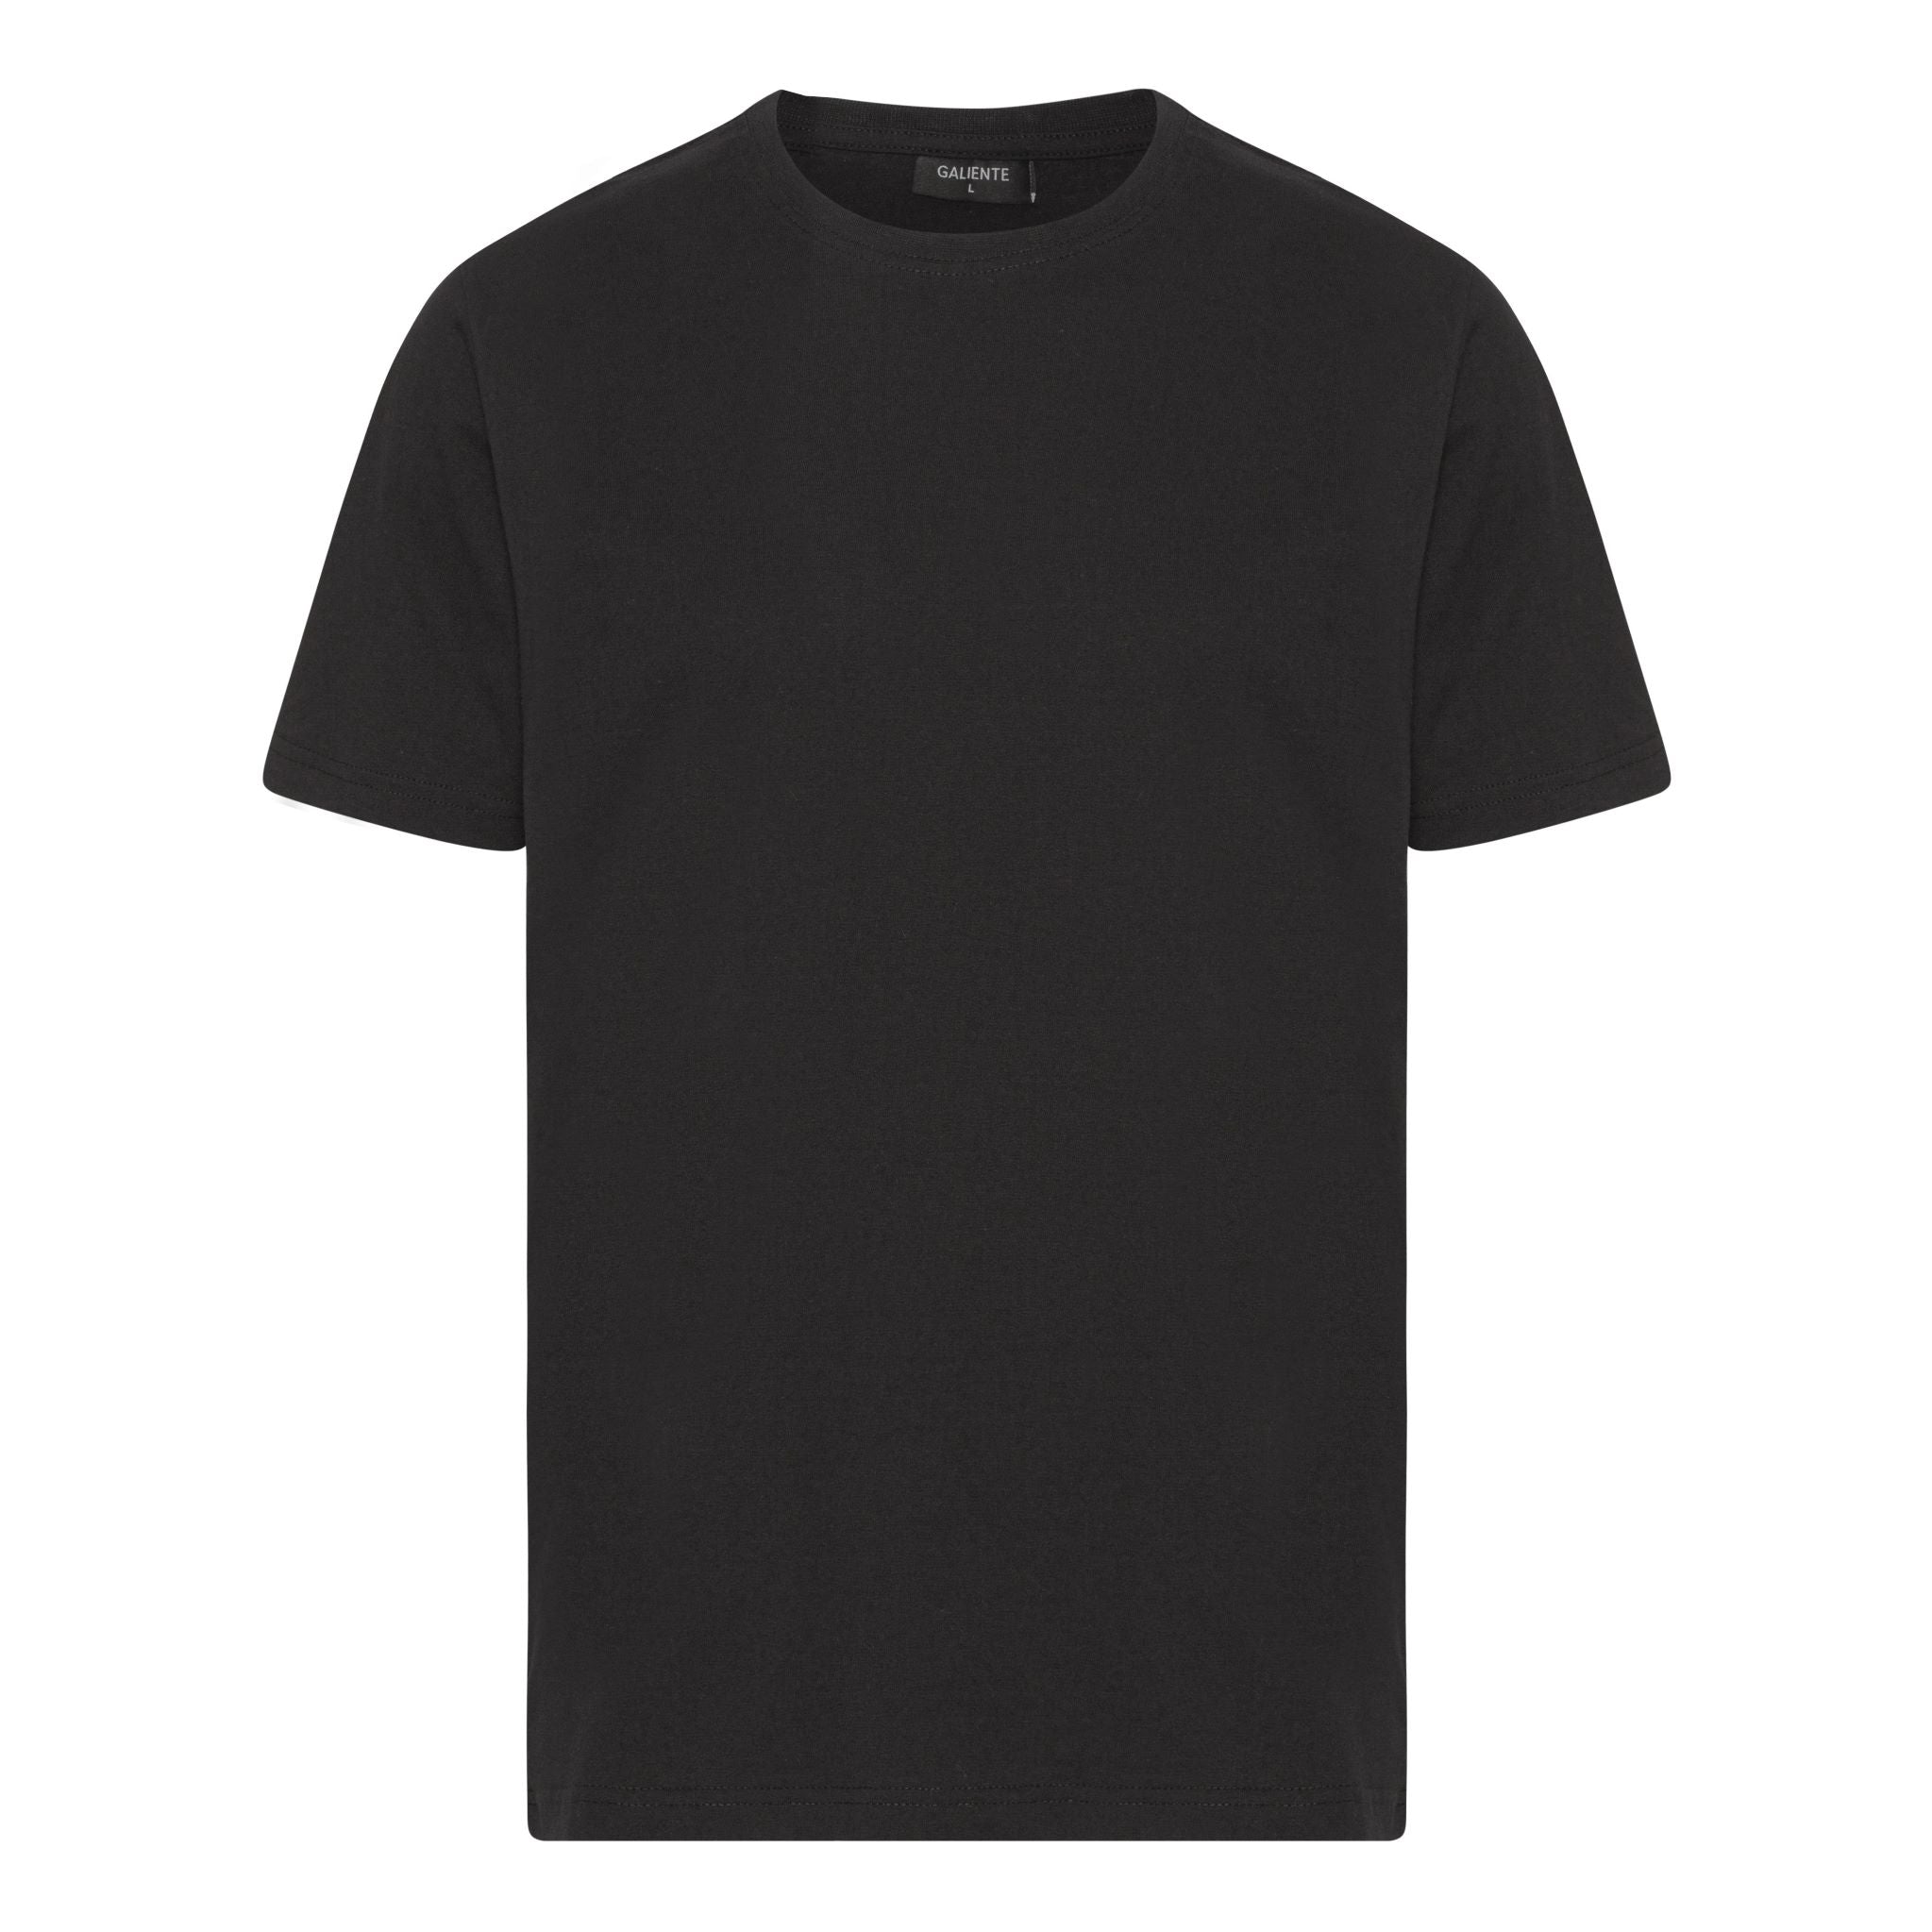 Oversize black T-shirt with blue logo print